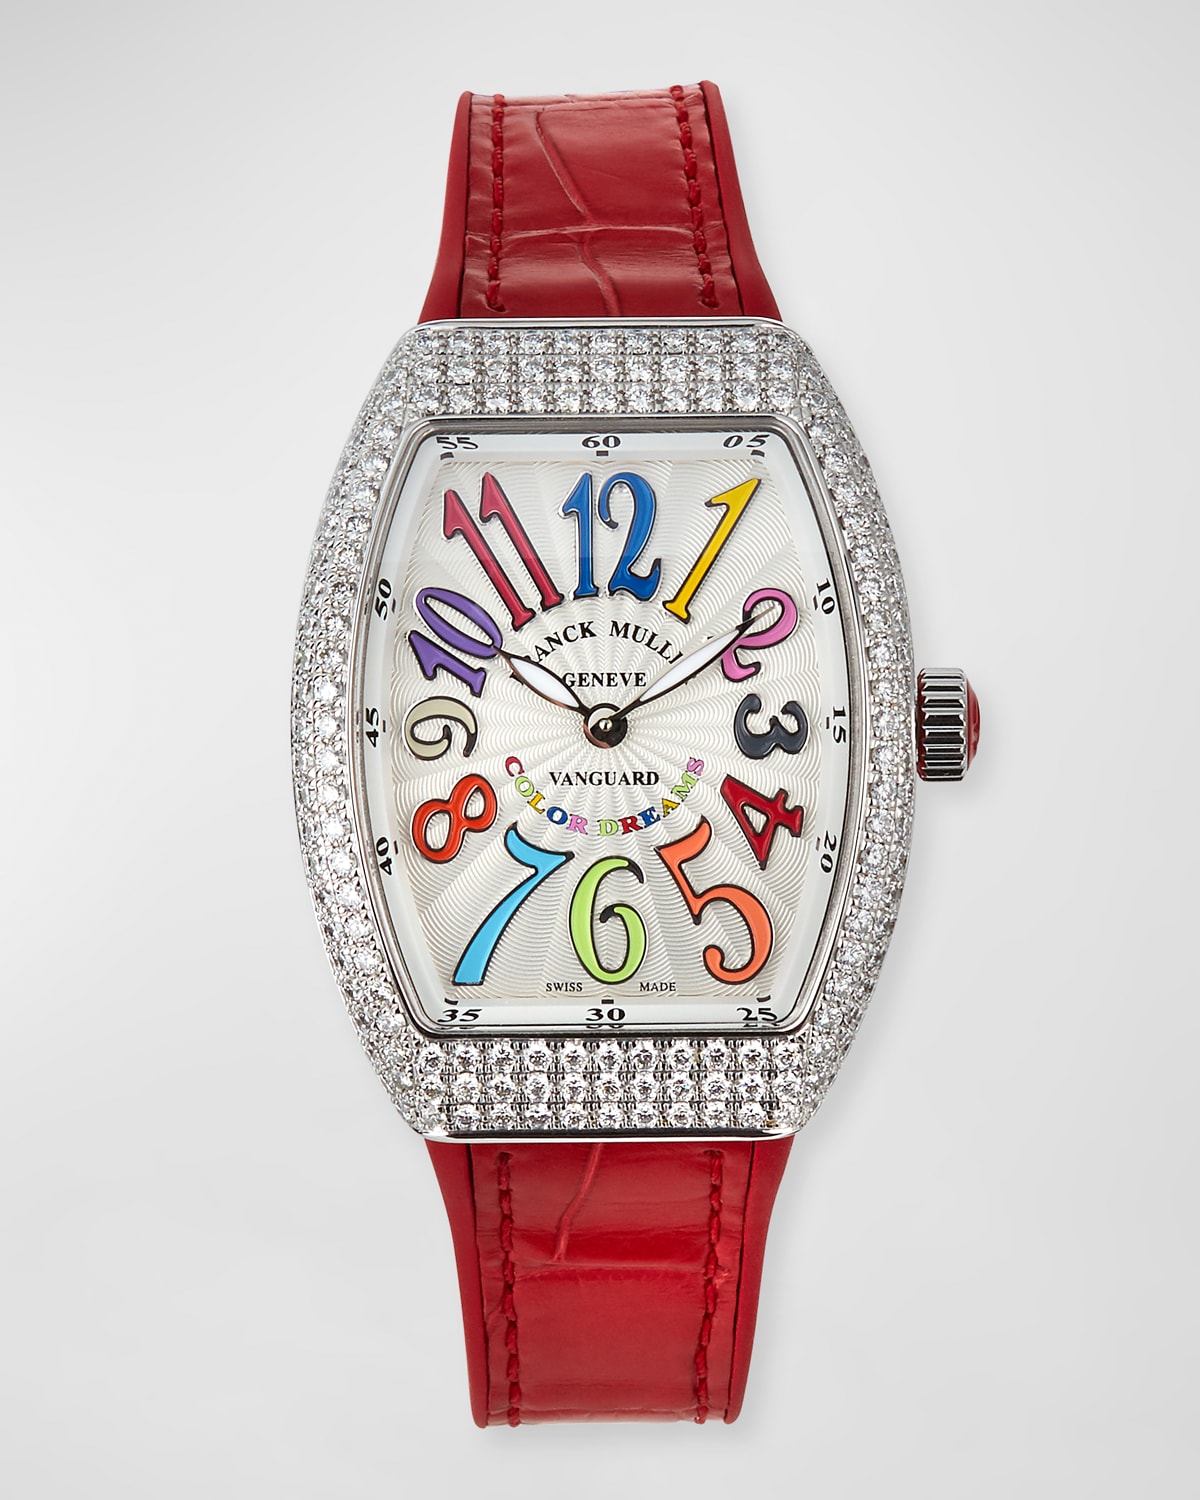 Lady Vanguard Color Dreams Diamond Watch w/ Alligator Strap, Red